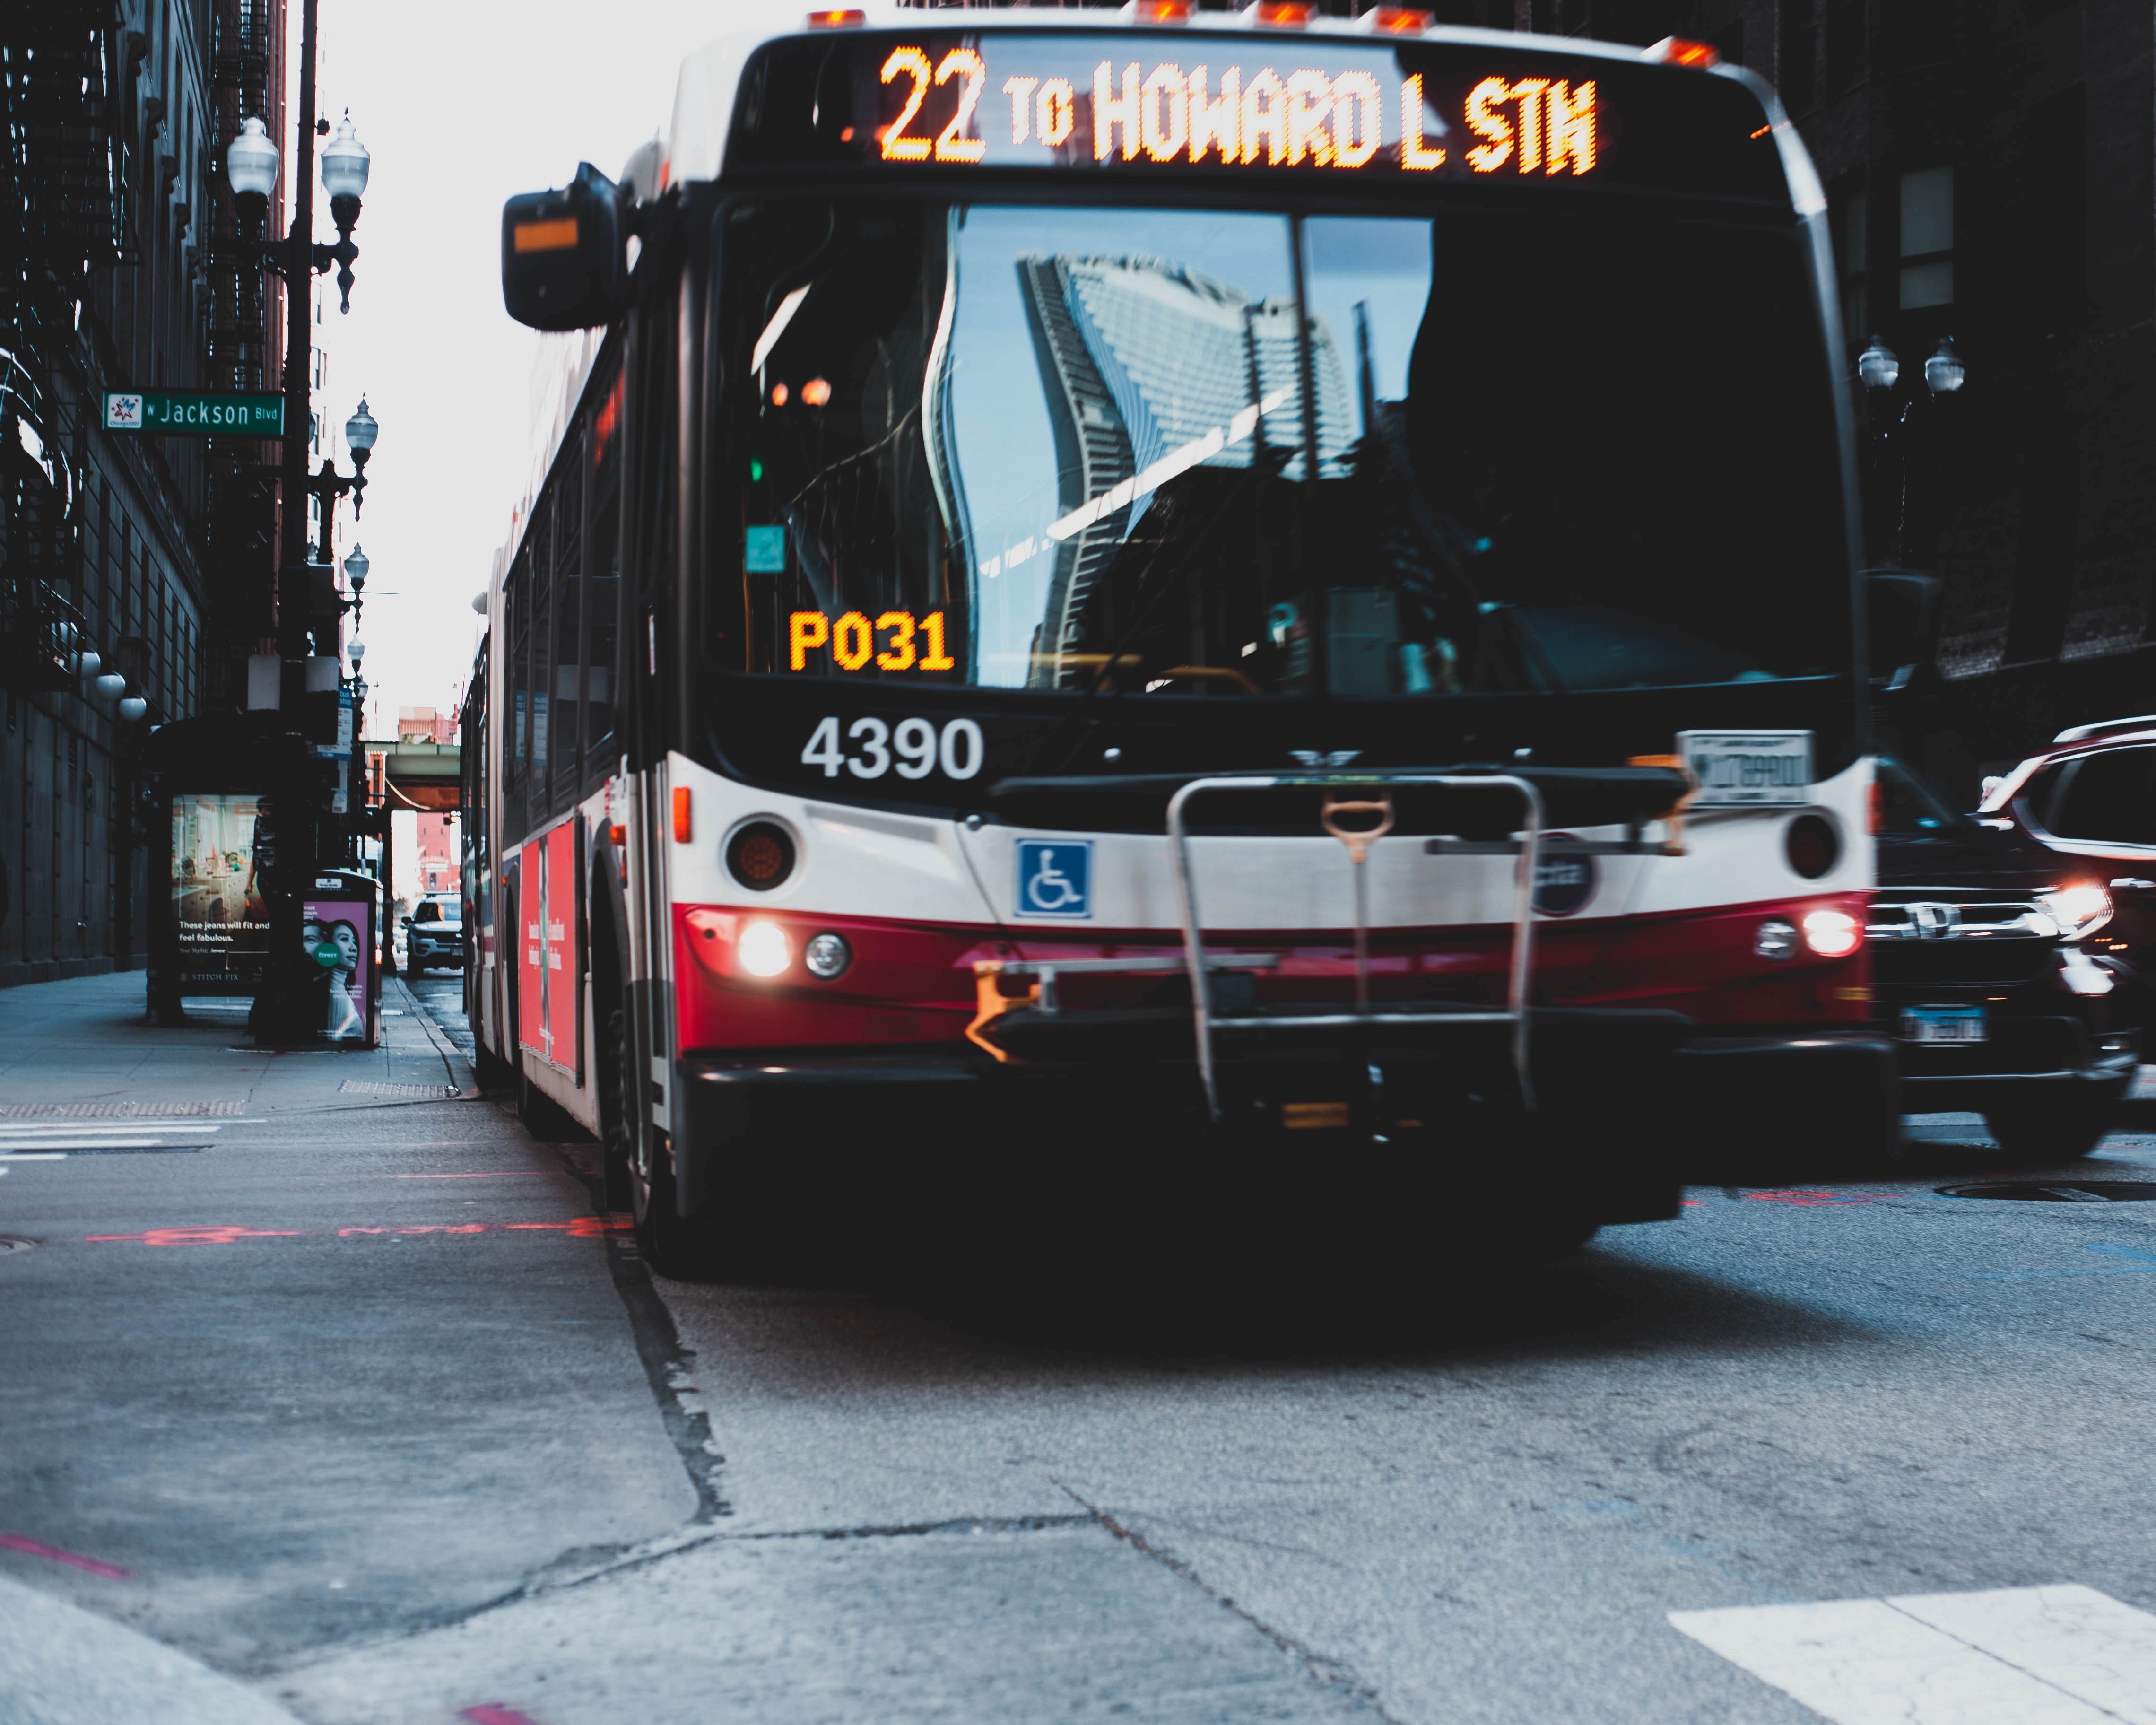 Bus in the city. | Source: edwin josé vega ramos/Pexels